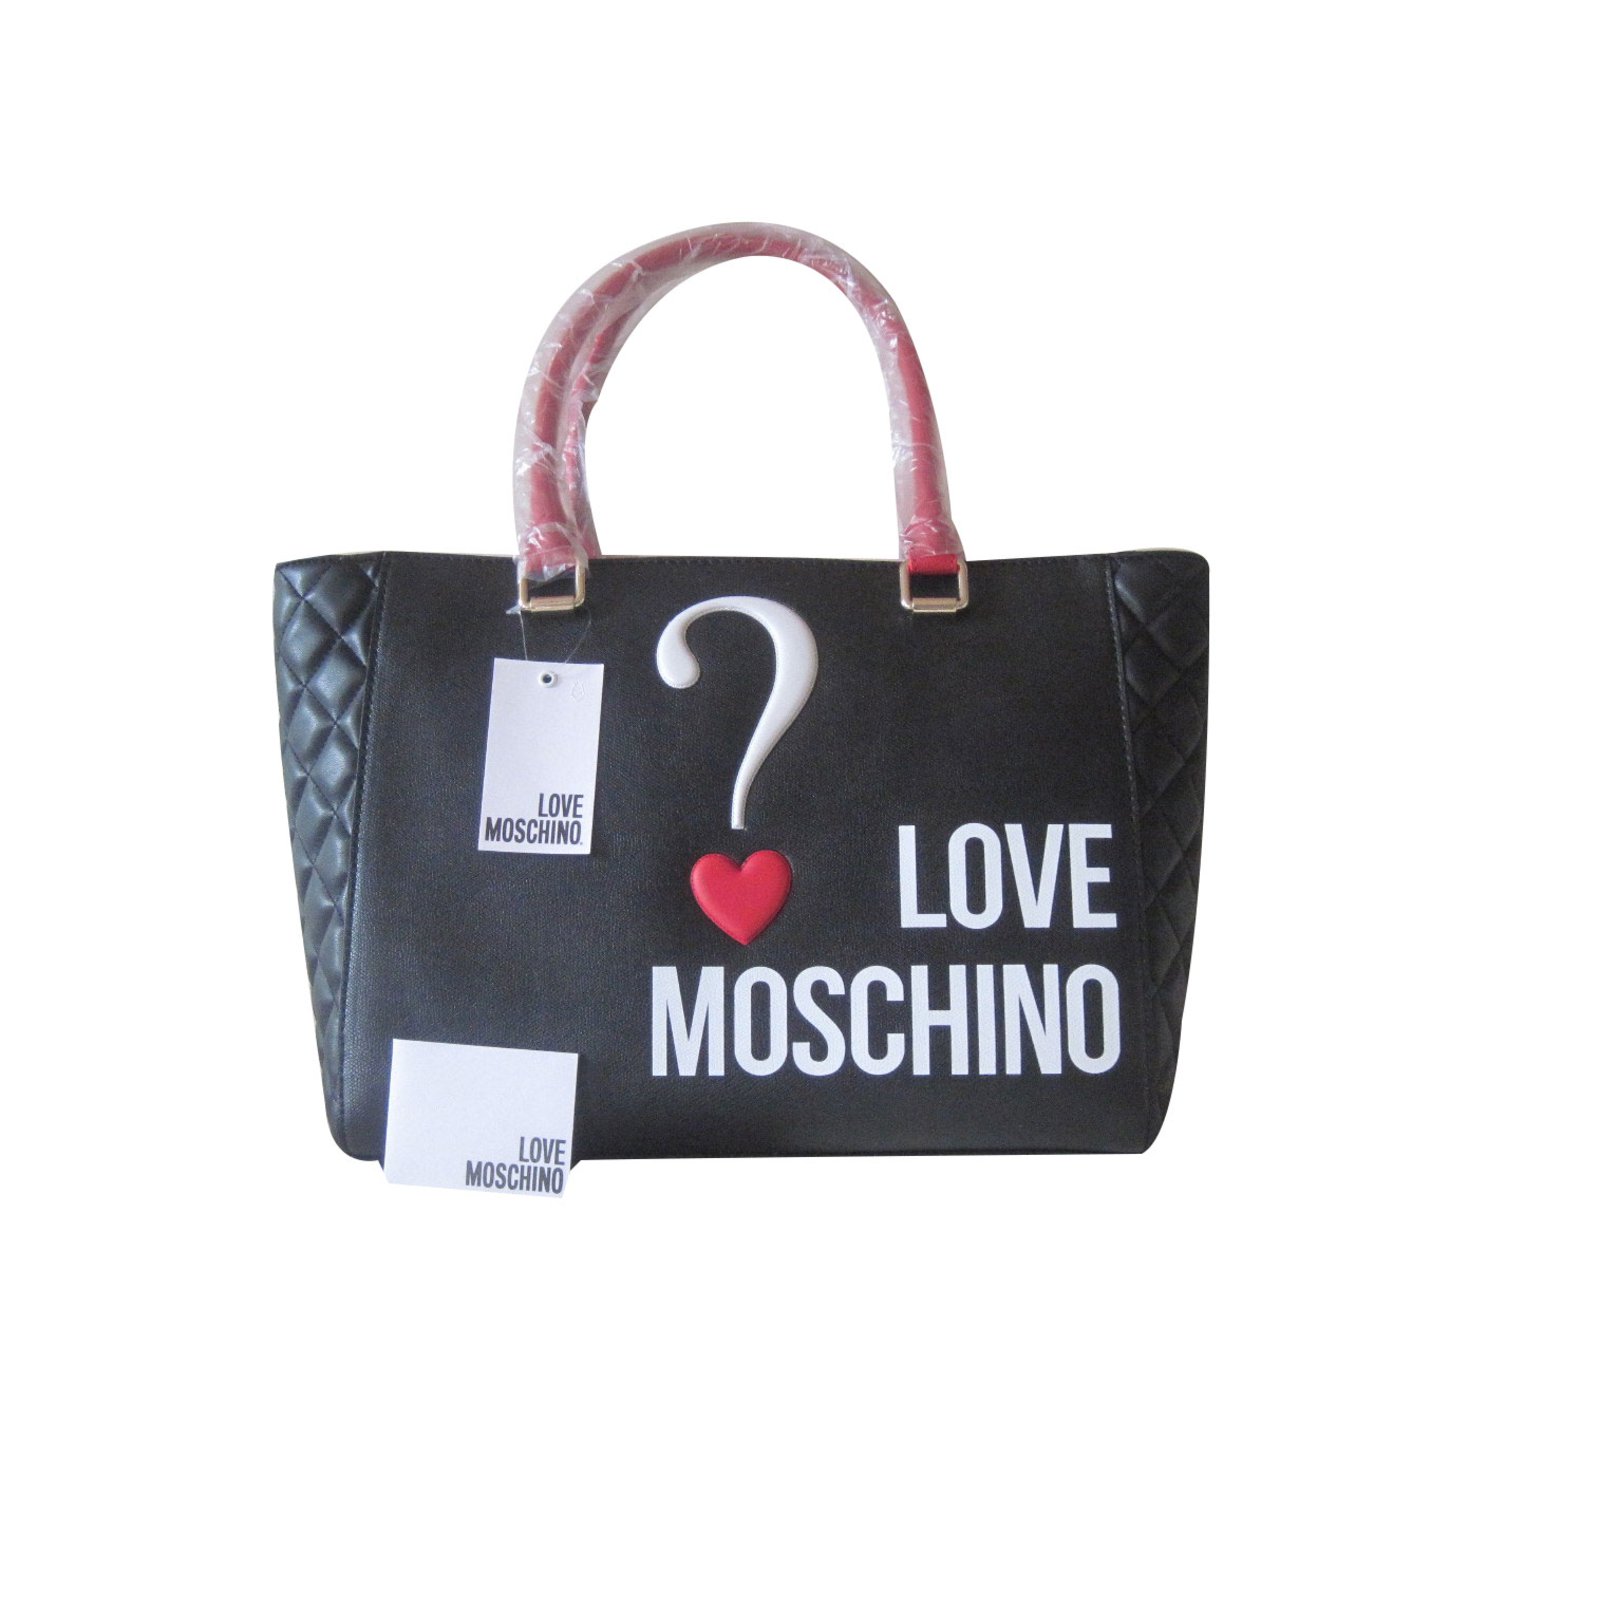 Moschino 2017/2018 Handbags Leather 